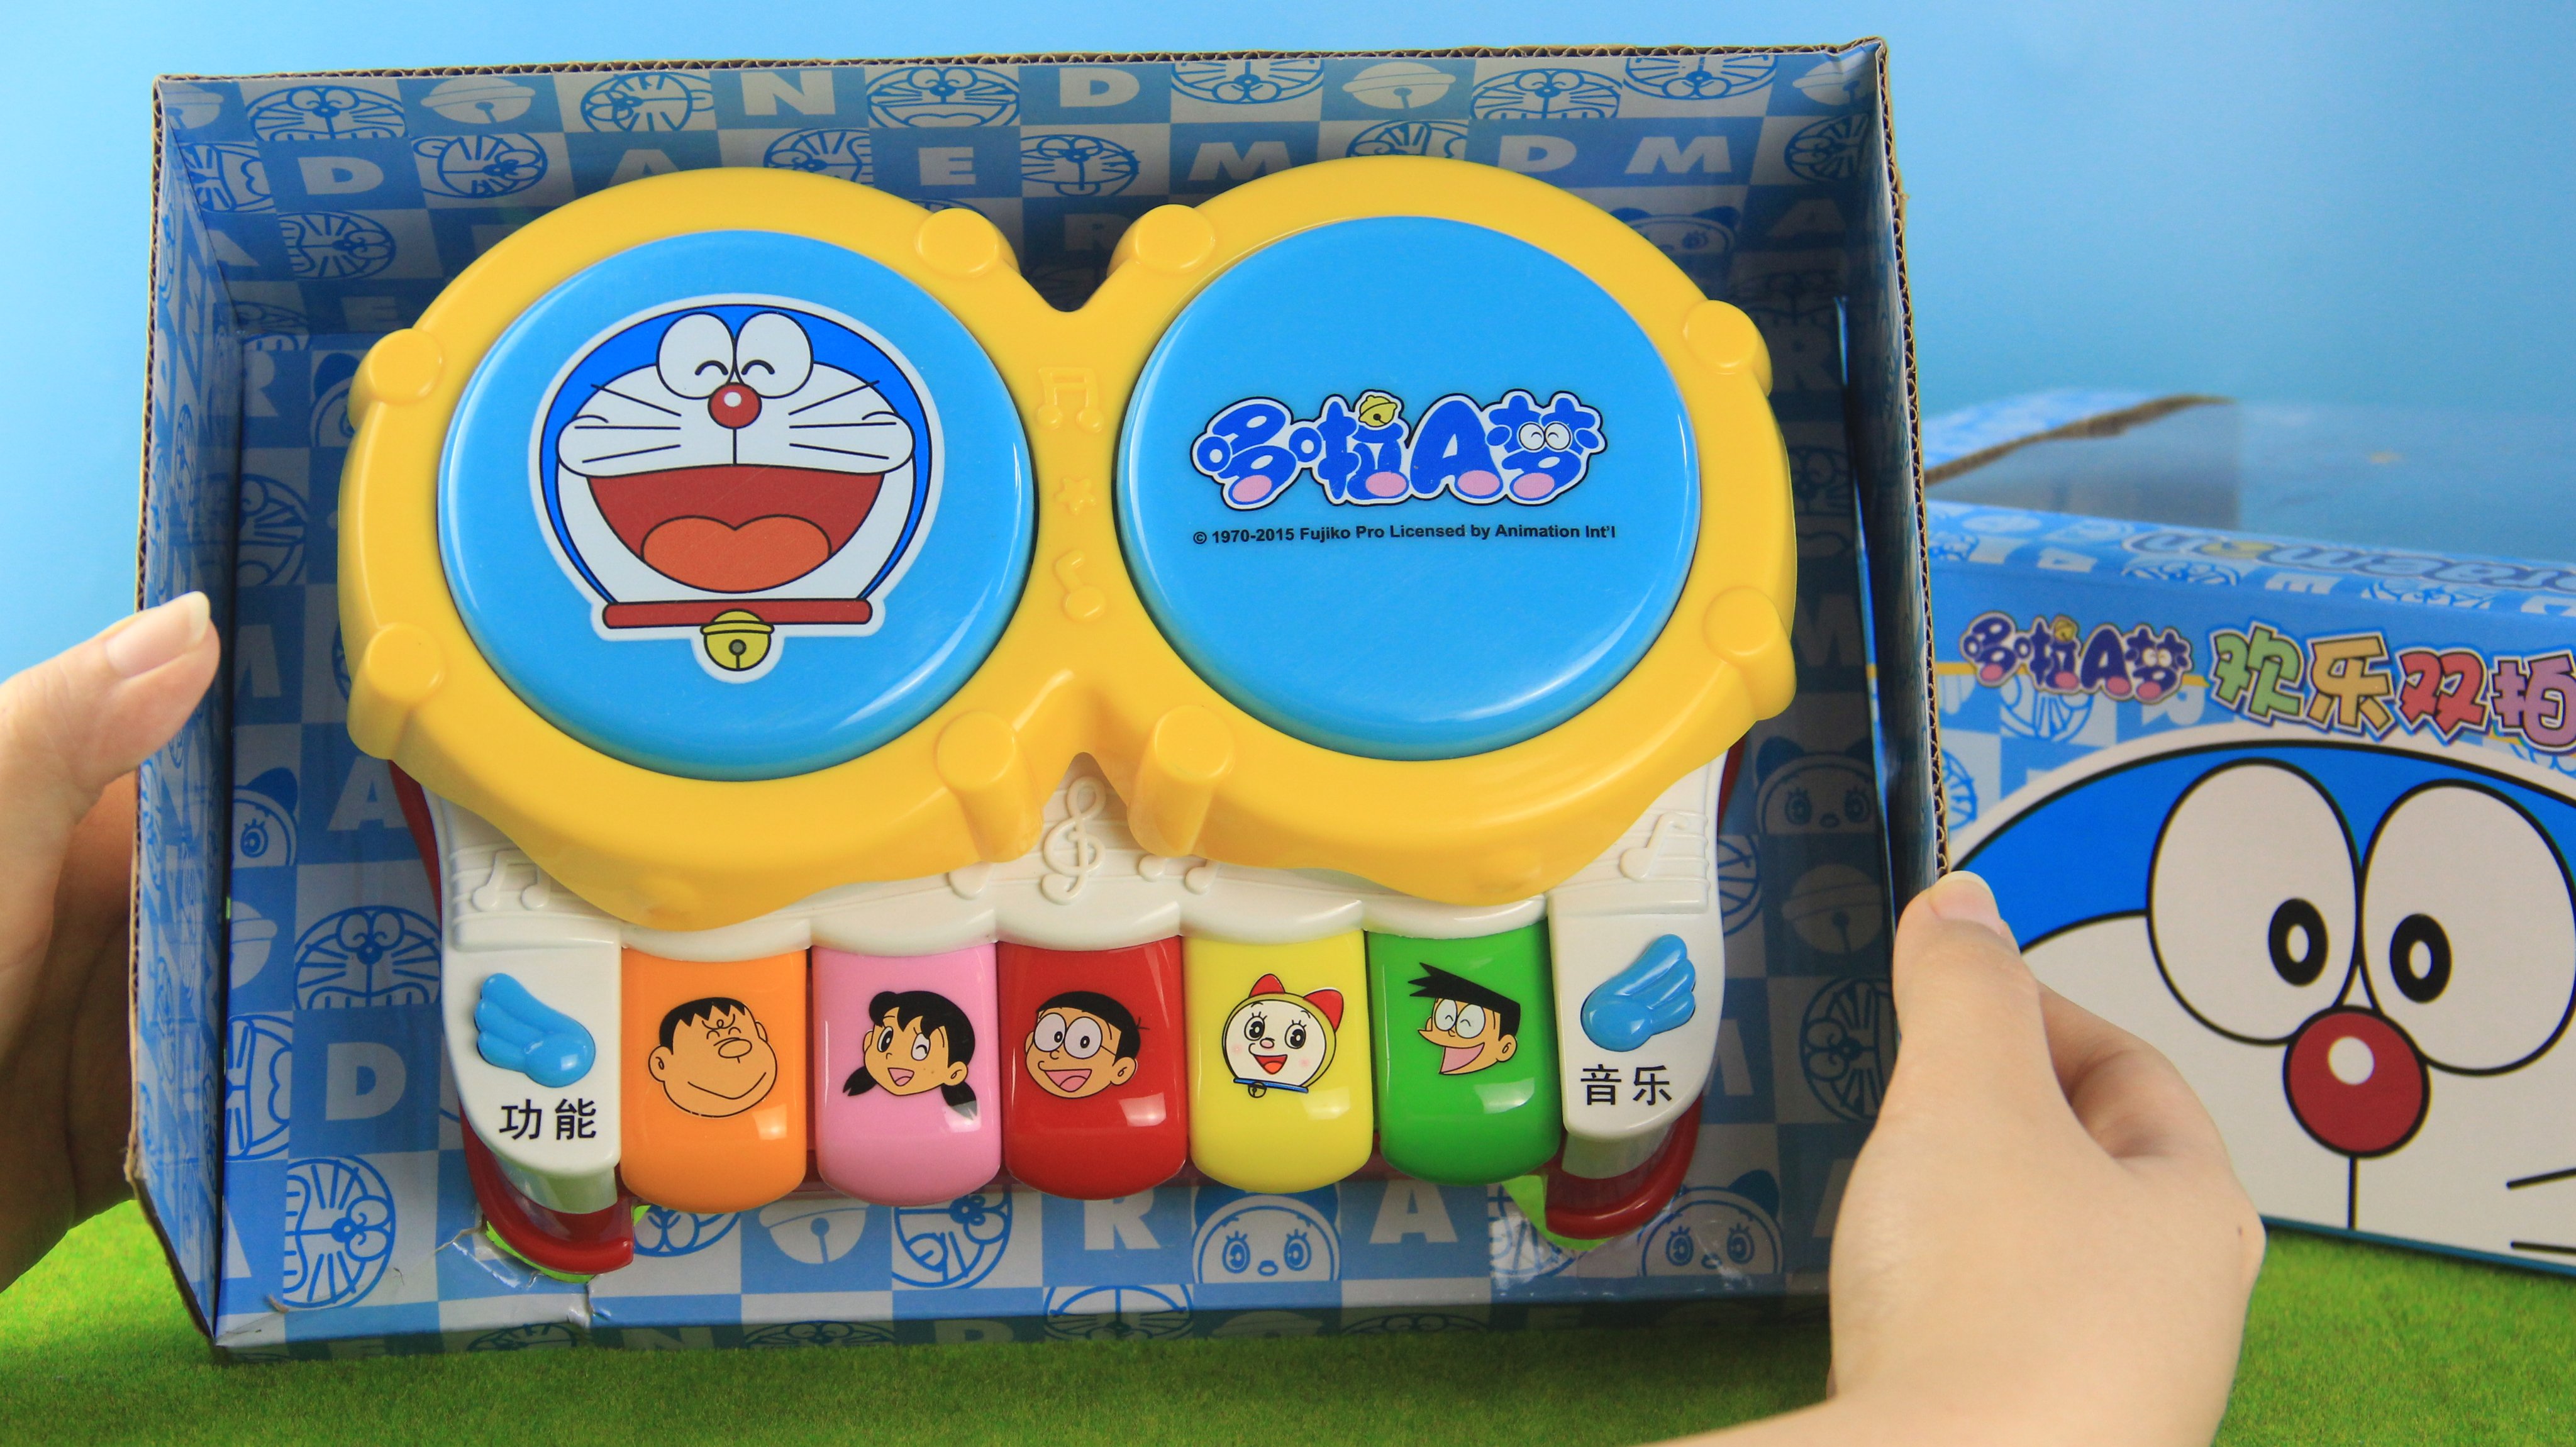 Giftwhat ドラえもん おもちゃ Doraemon Piano Toy Watch On T Co Oosf6aijok Doraemon ドラえもん Doremon 哆啦a梦 Doraemon19 Doraemontoy19 Nobita Doramon Toys Kids おもちゃ ドラえもんおもちゃ アニメ ドラえもんアニメ